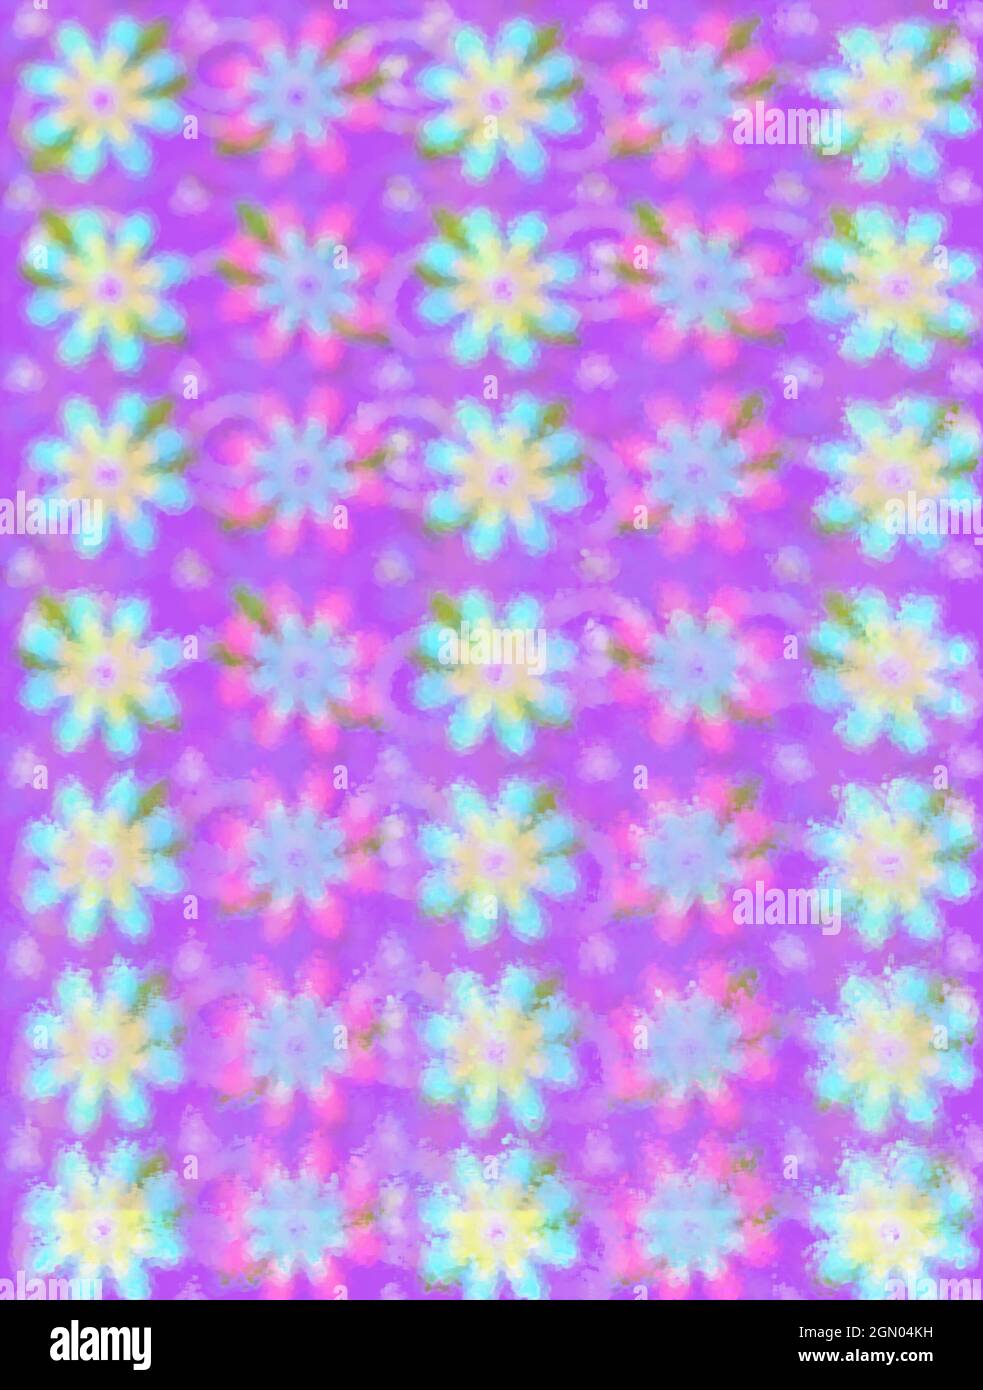 Soft outline of daisy-like flowers fill background image. Purple peeks ...